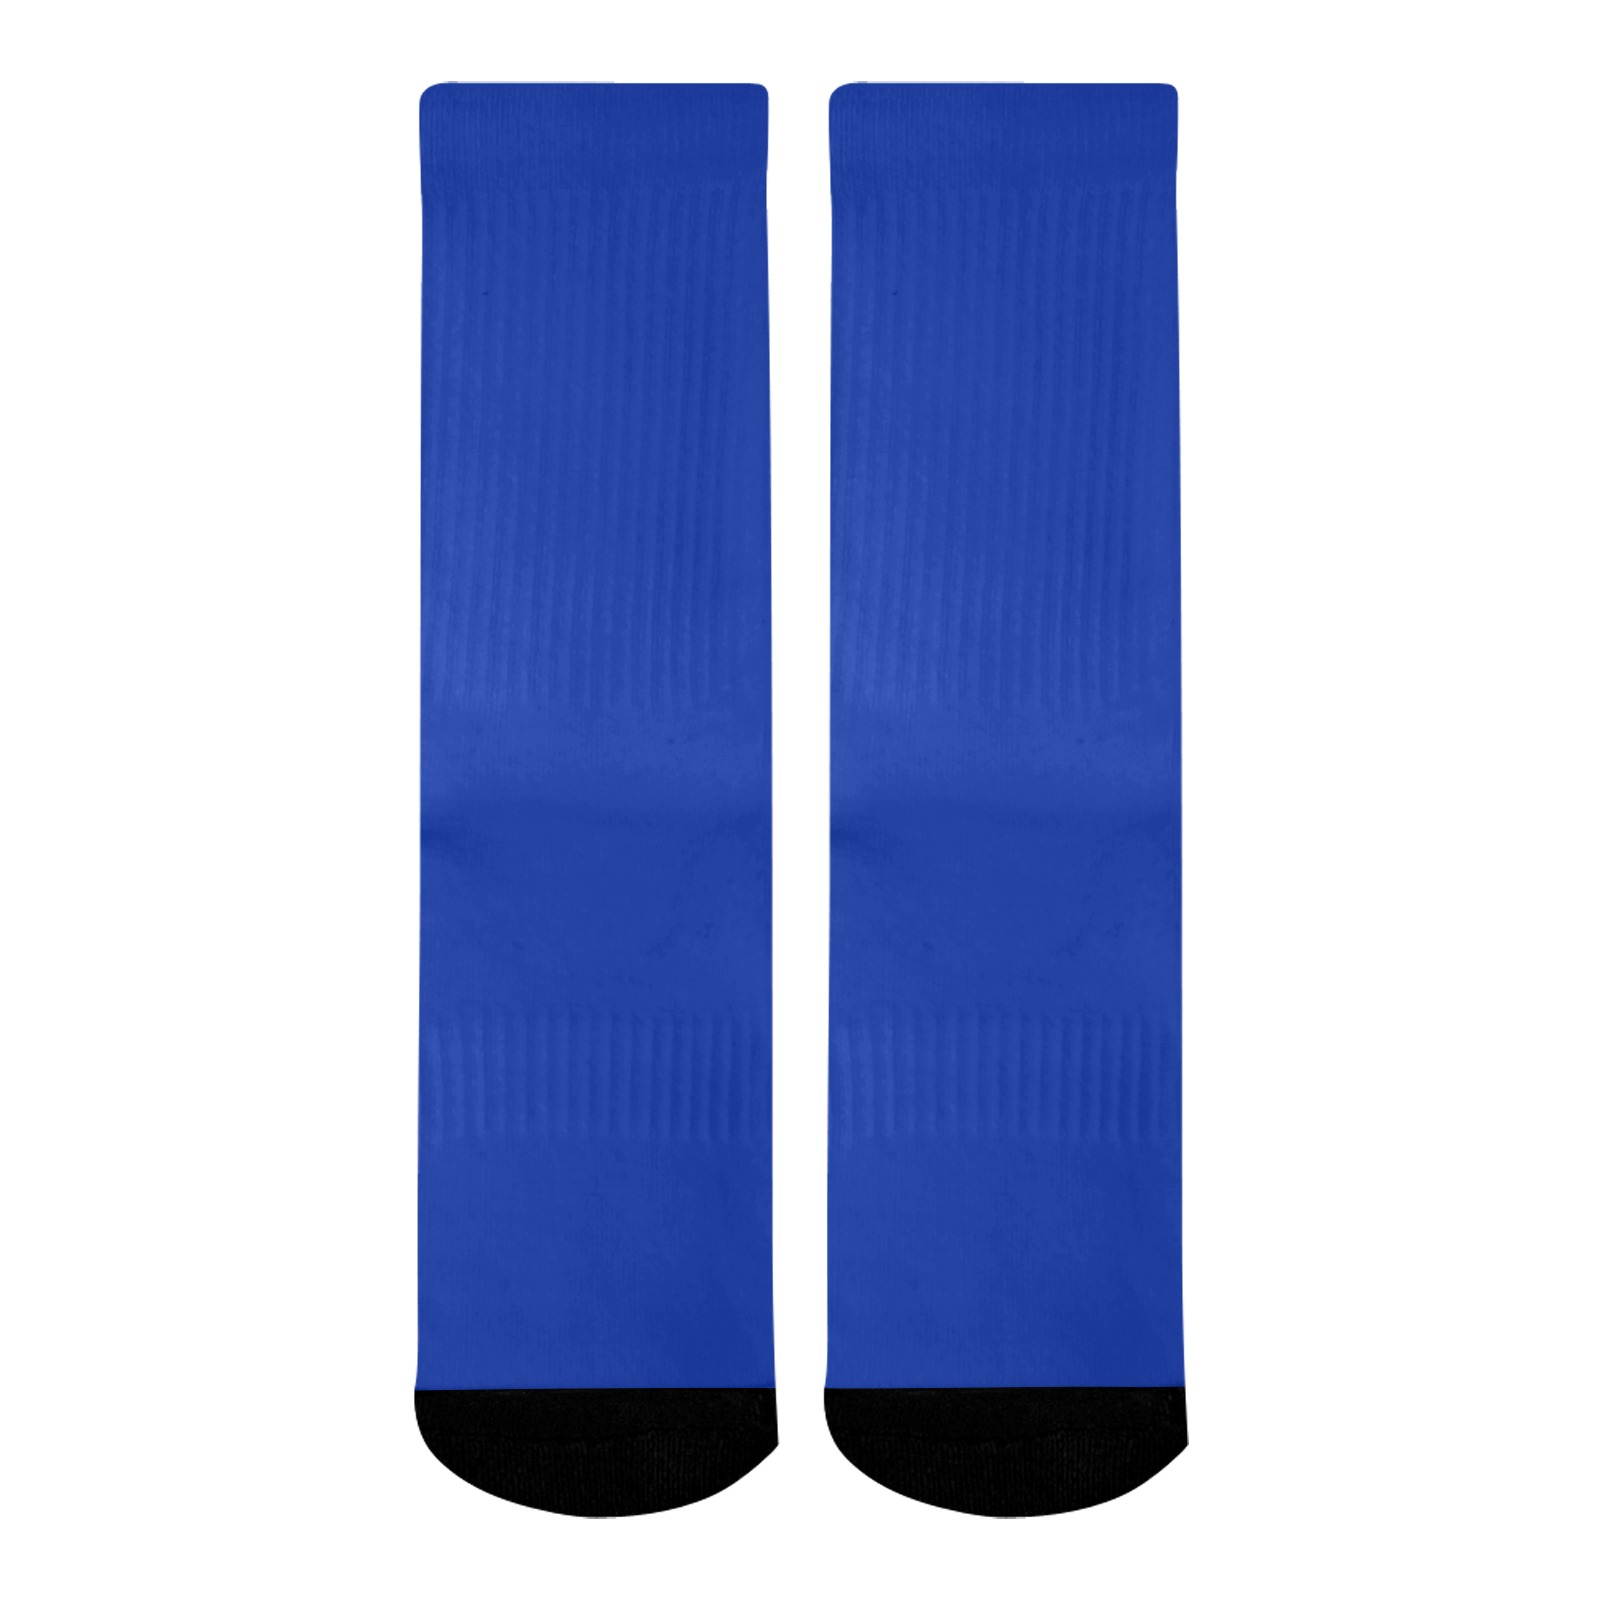 color Egyptian blue Mid-Calf Socks (Black Sole)